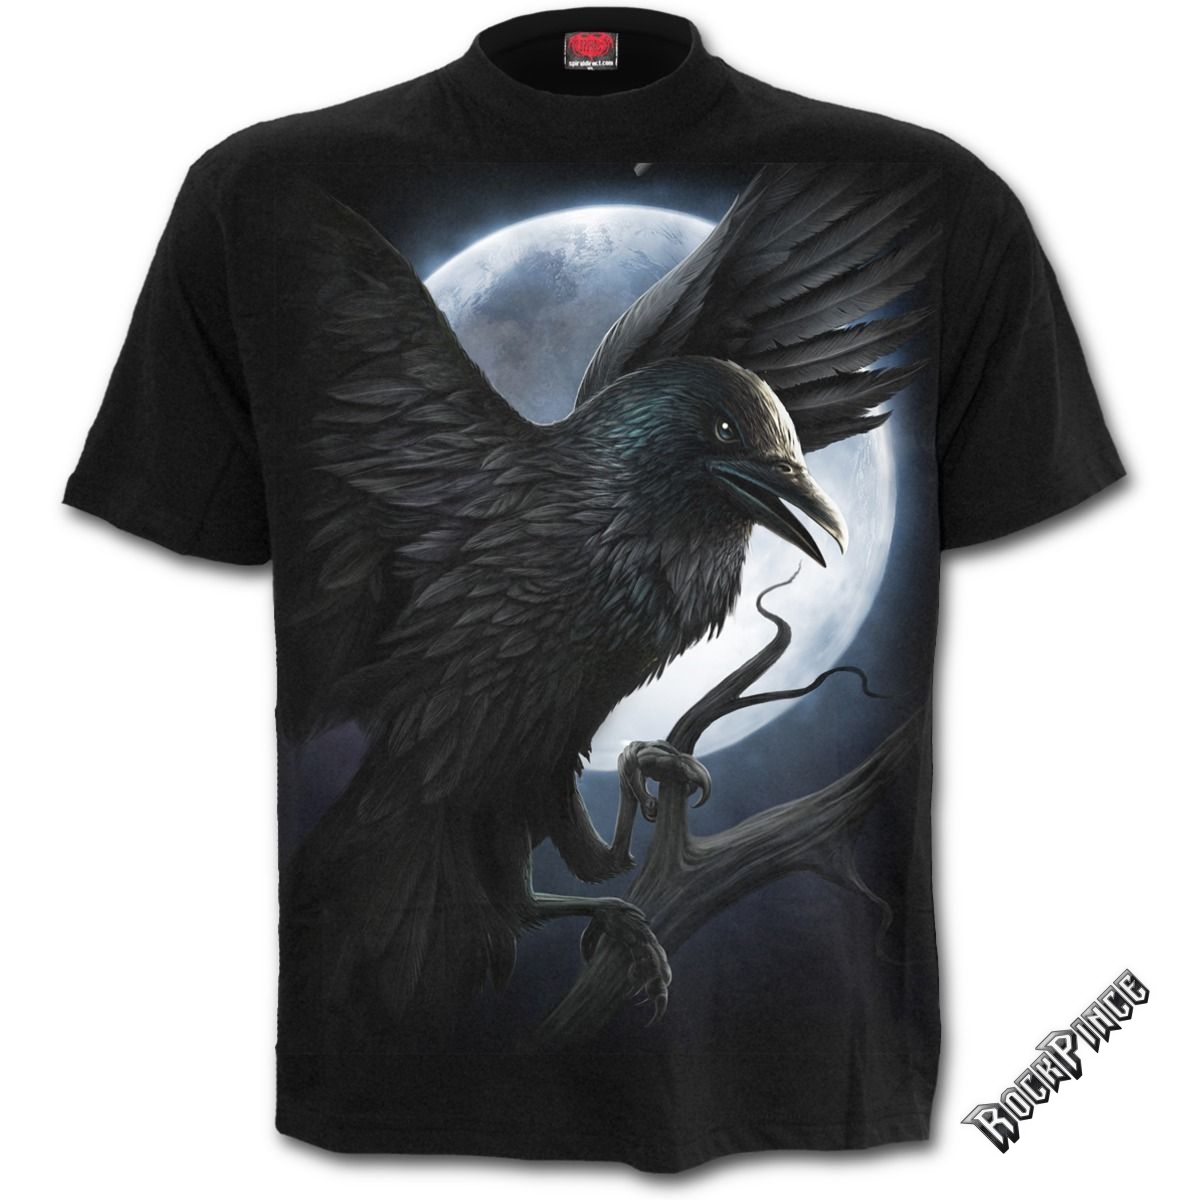 NIGHT CREATURE - T-Shirt Black - T116M101